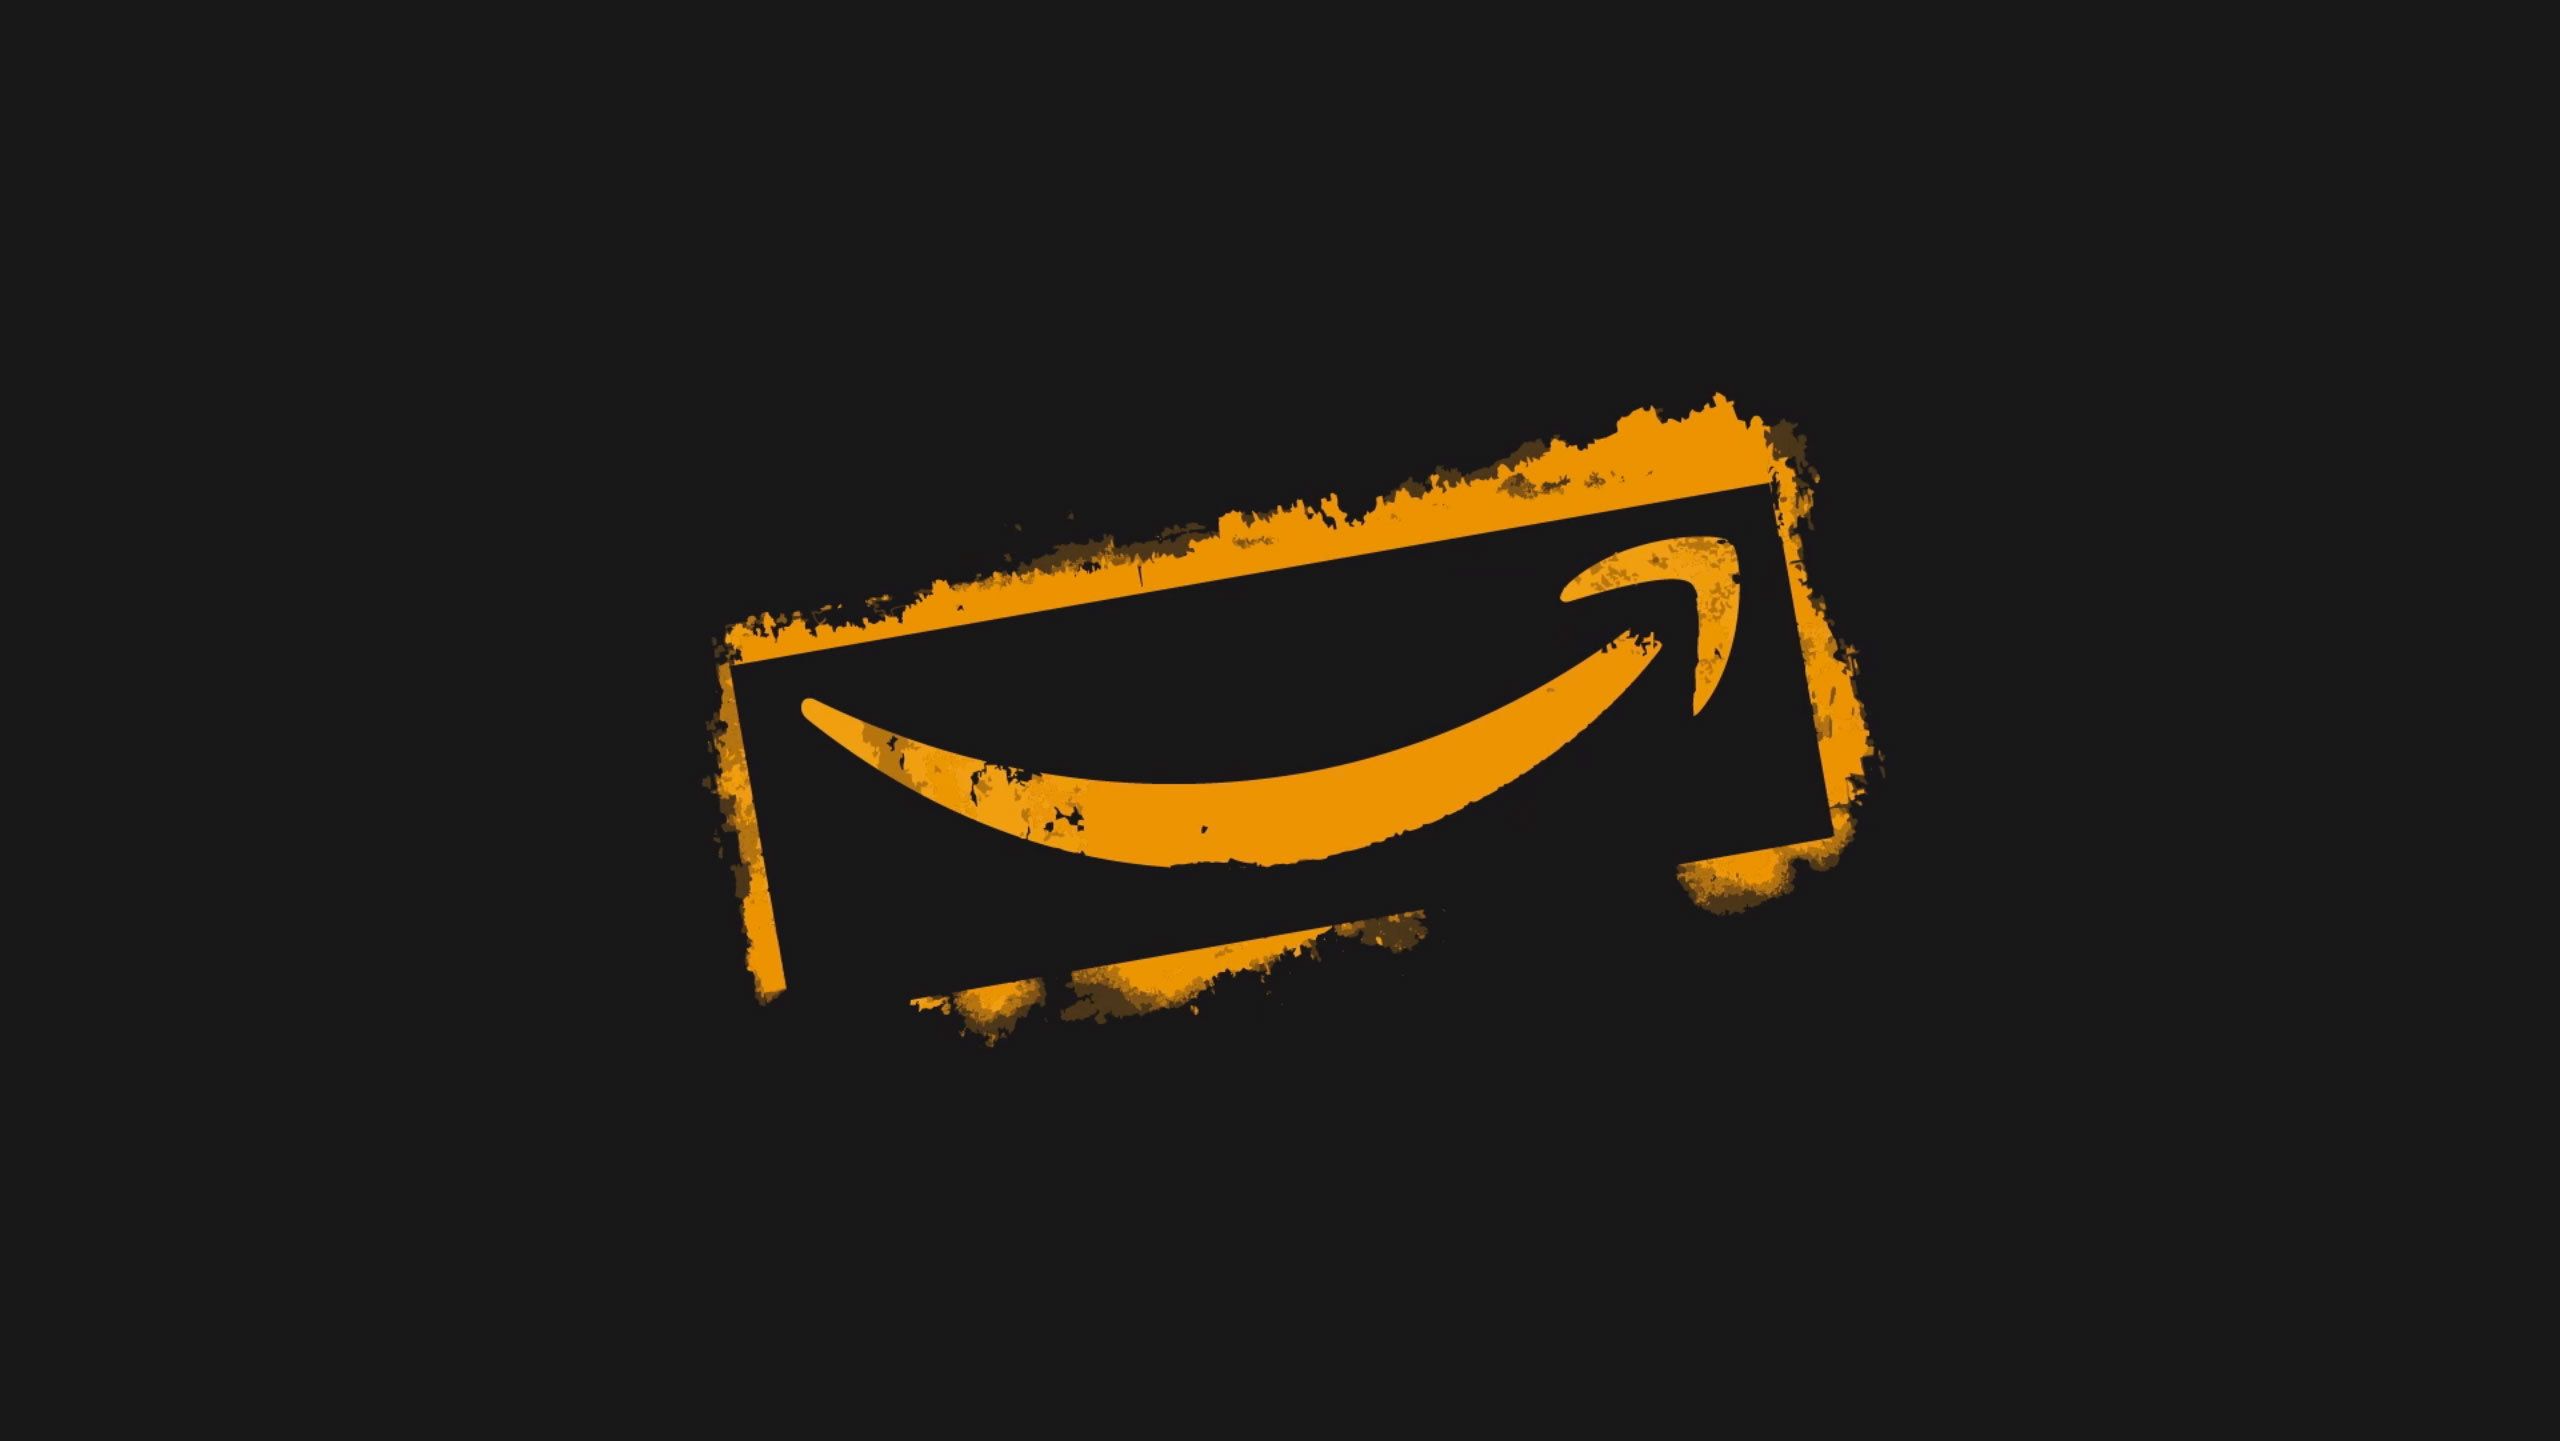  Amazon Hintergrundbild 2560x1441. Amazon Logo Wallpaper Free Amazon Logo Background